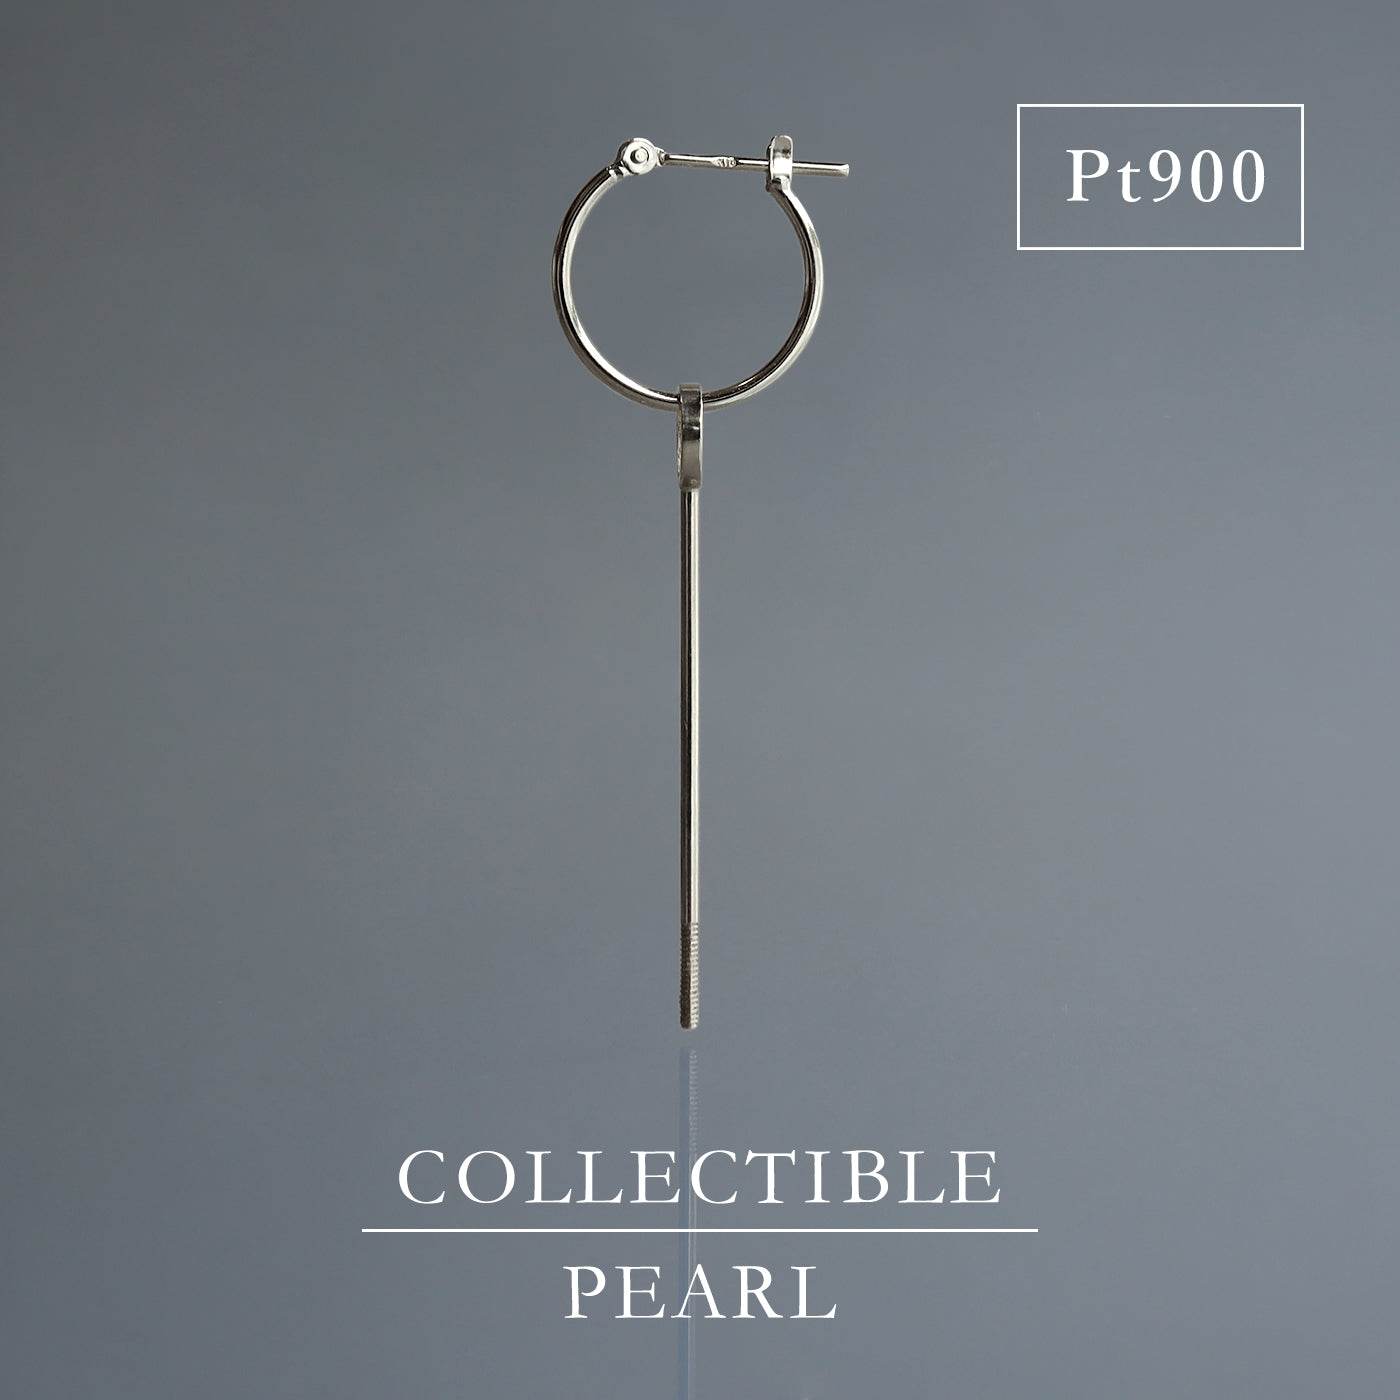 【BASE PARTS】Pt900 Long Stick Charm Hoop Pierced Earring